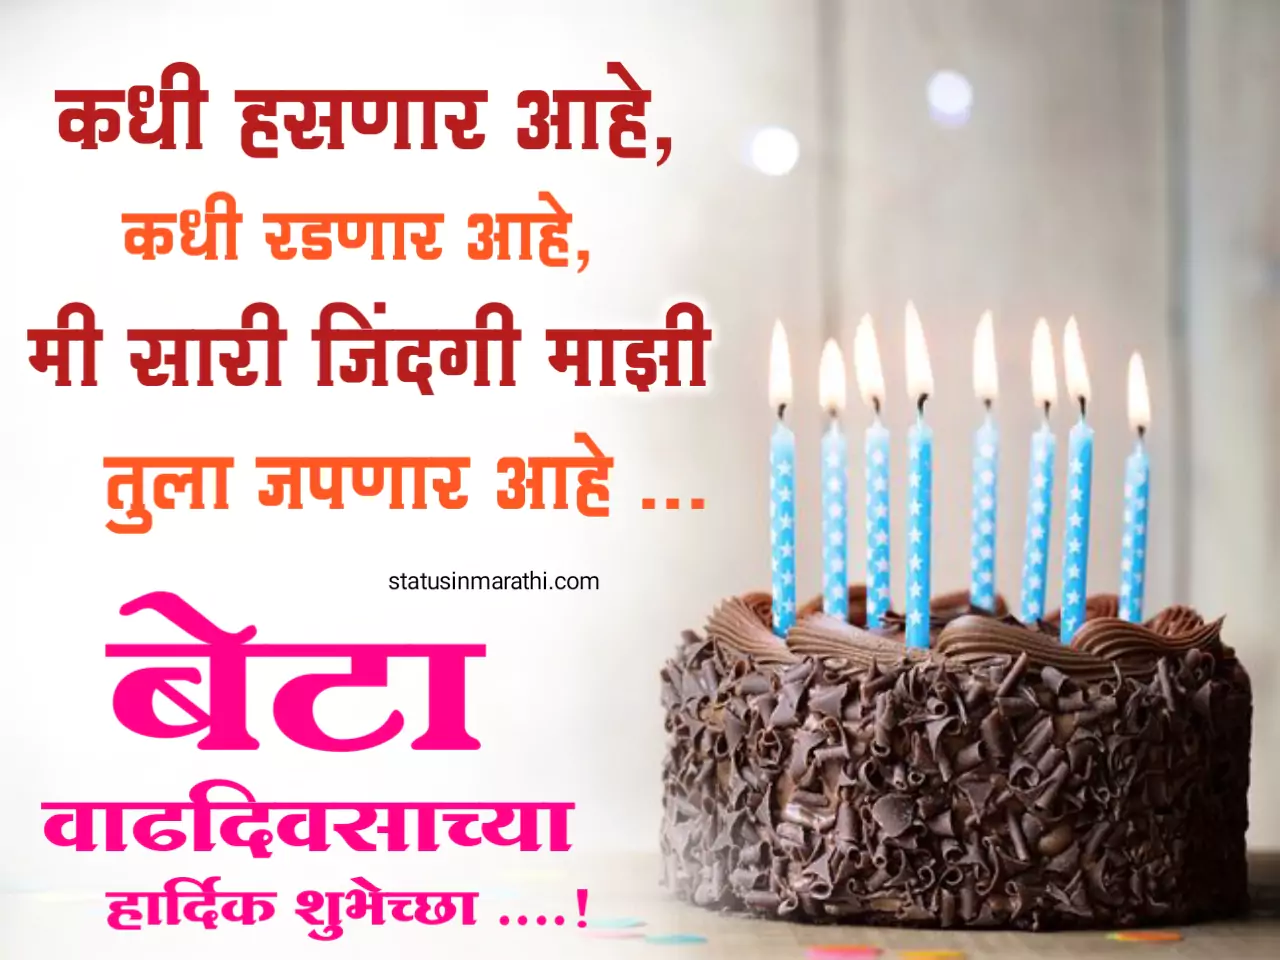 Happy birthday wishes for son in marathi